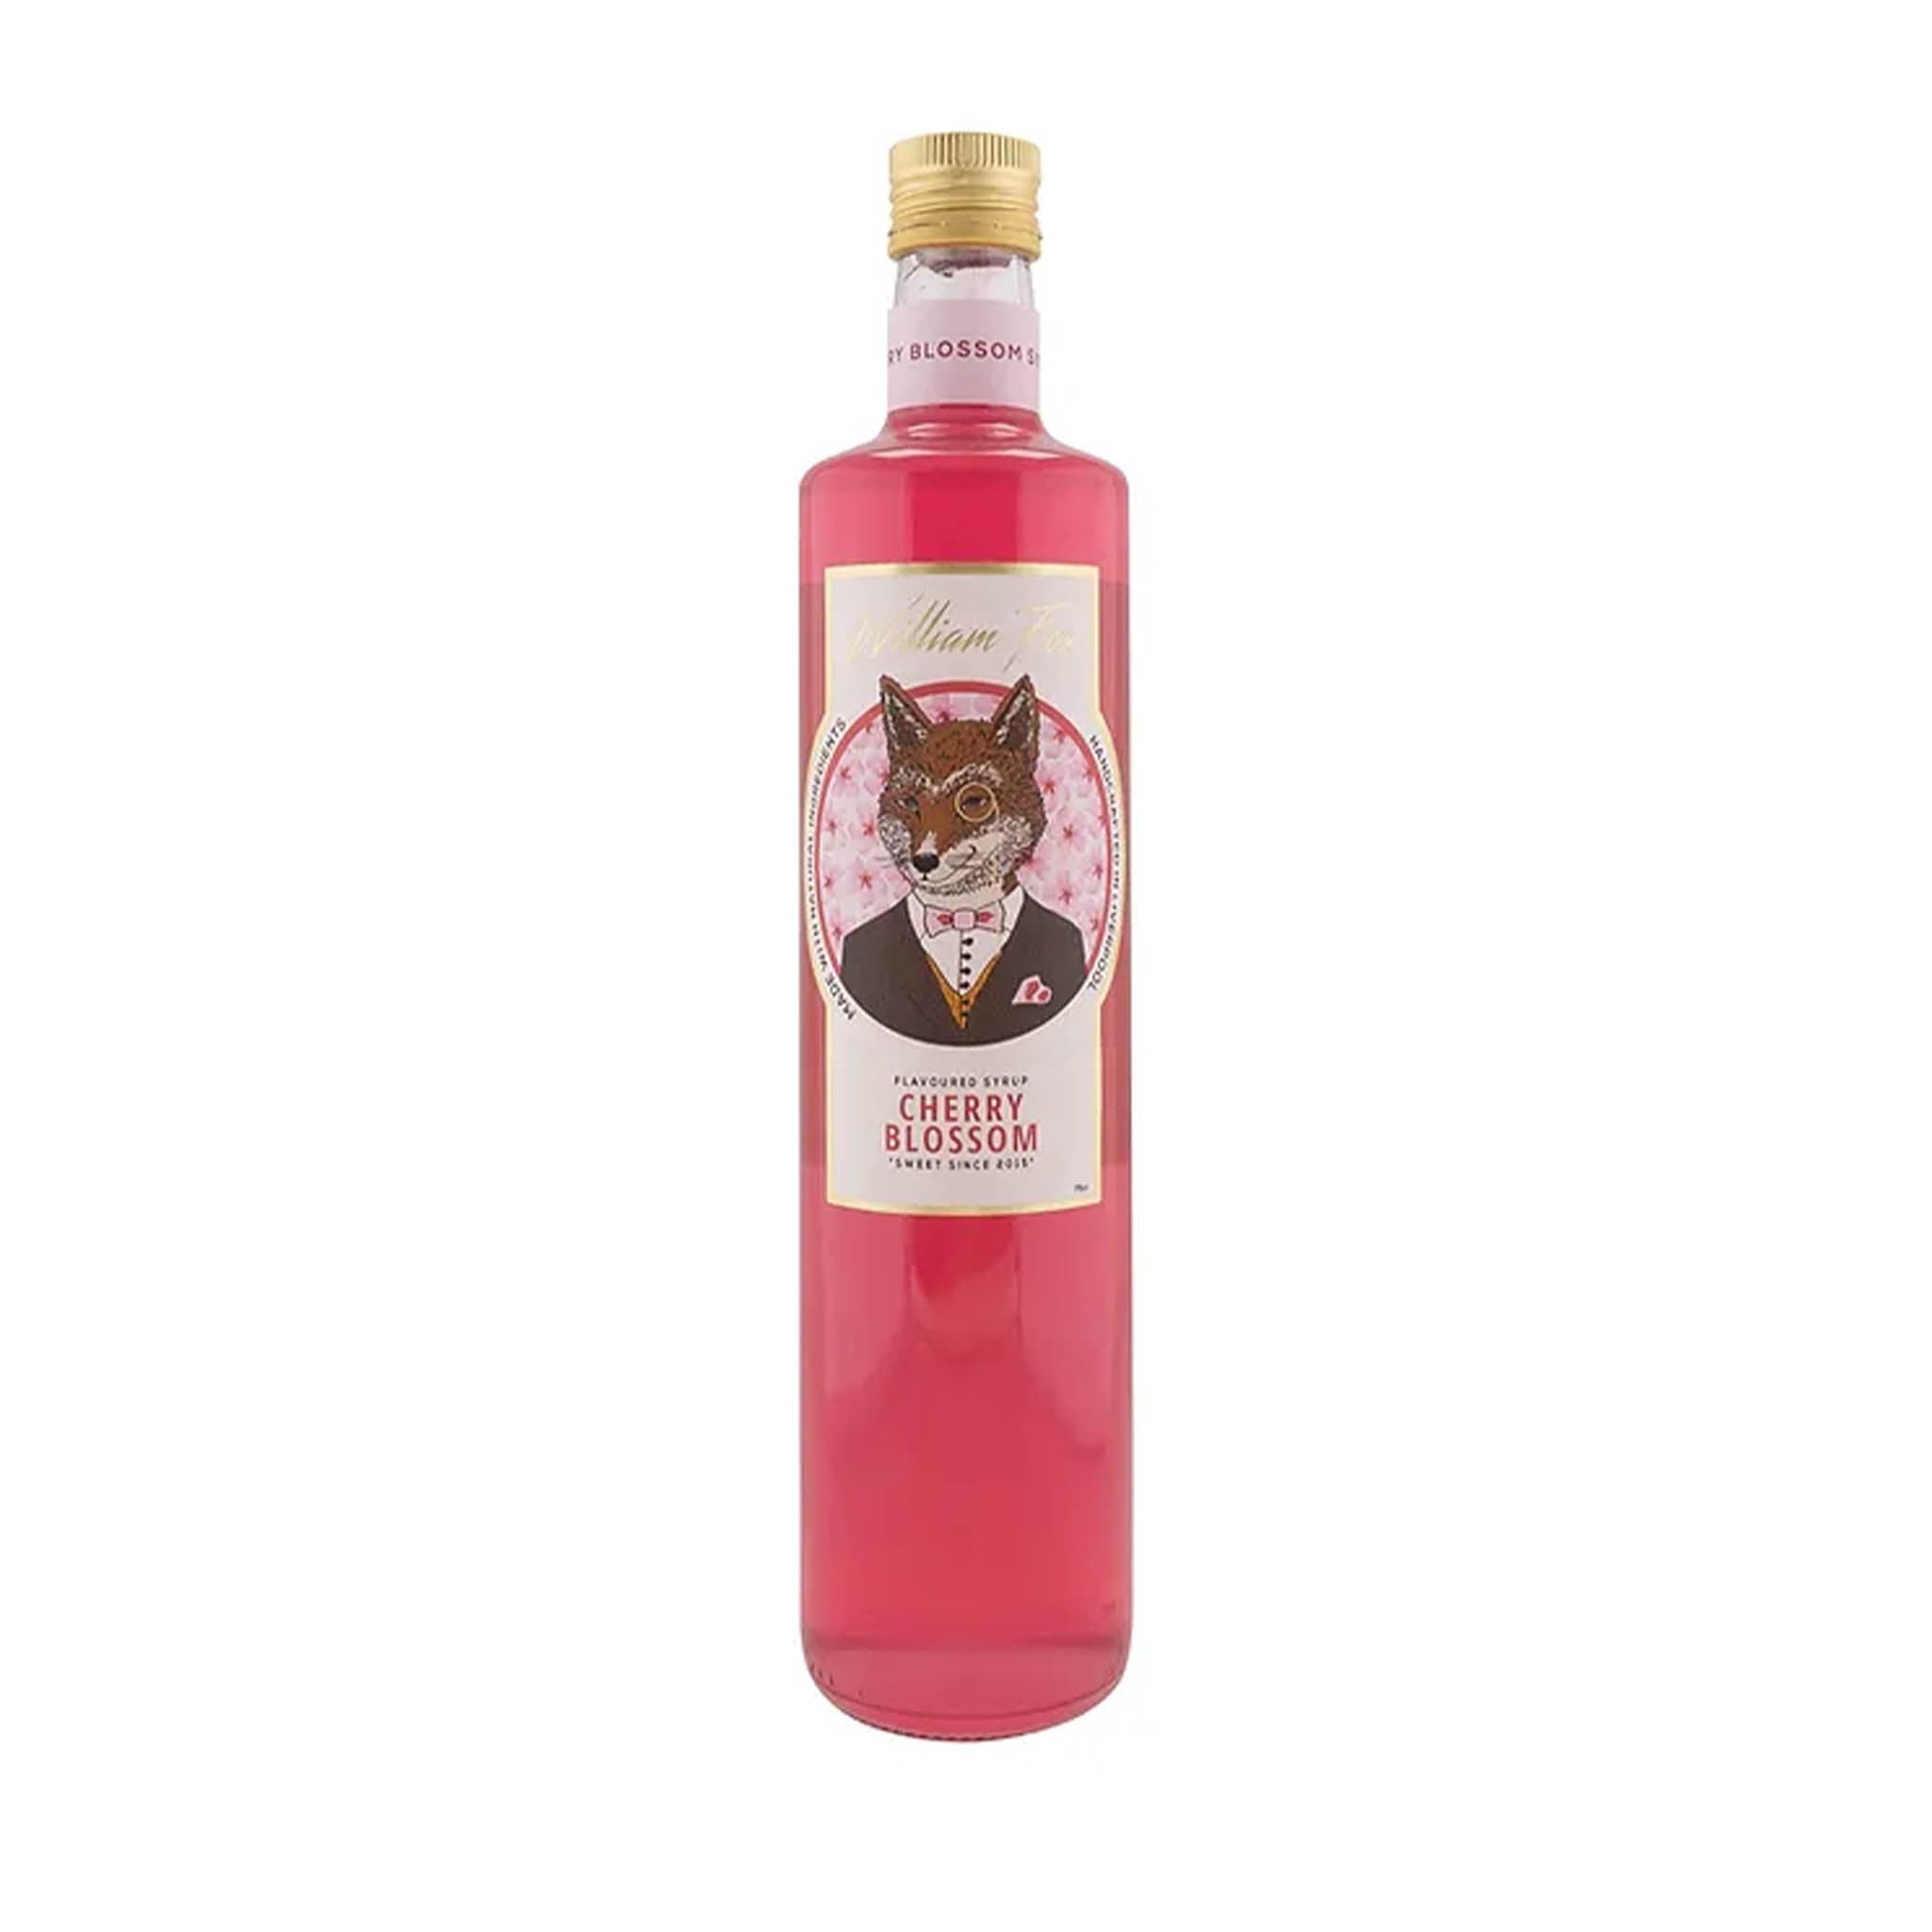 William Fox Premium Cherry Blossom Syrup, 750ml